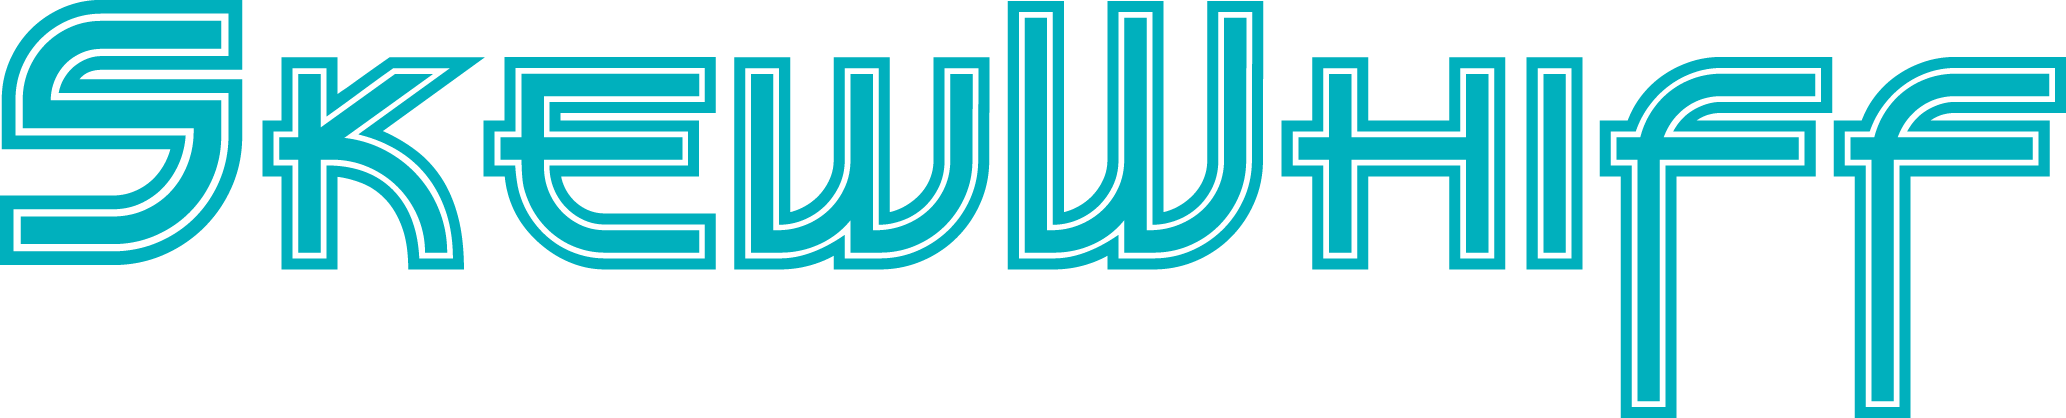 skewwhiff logo